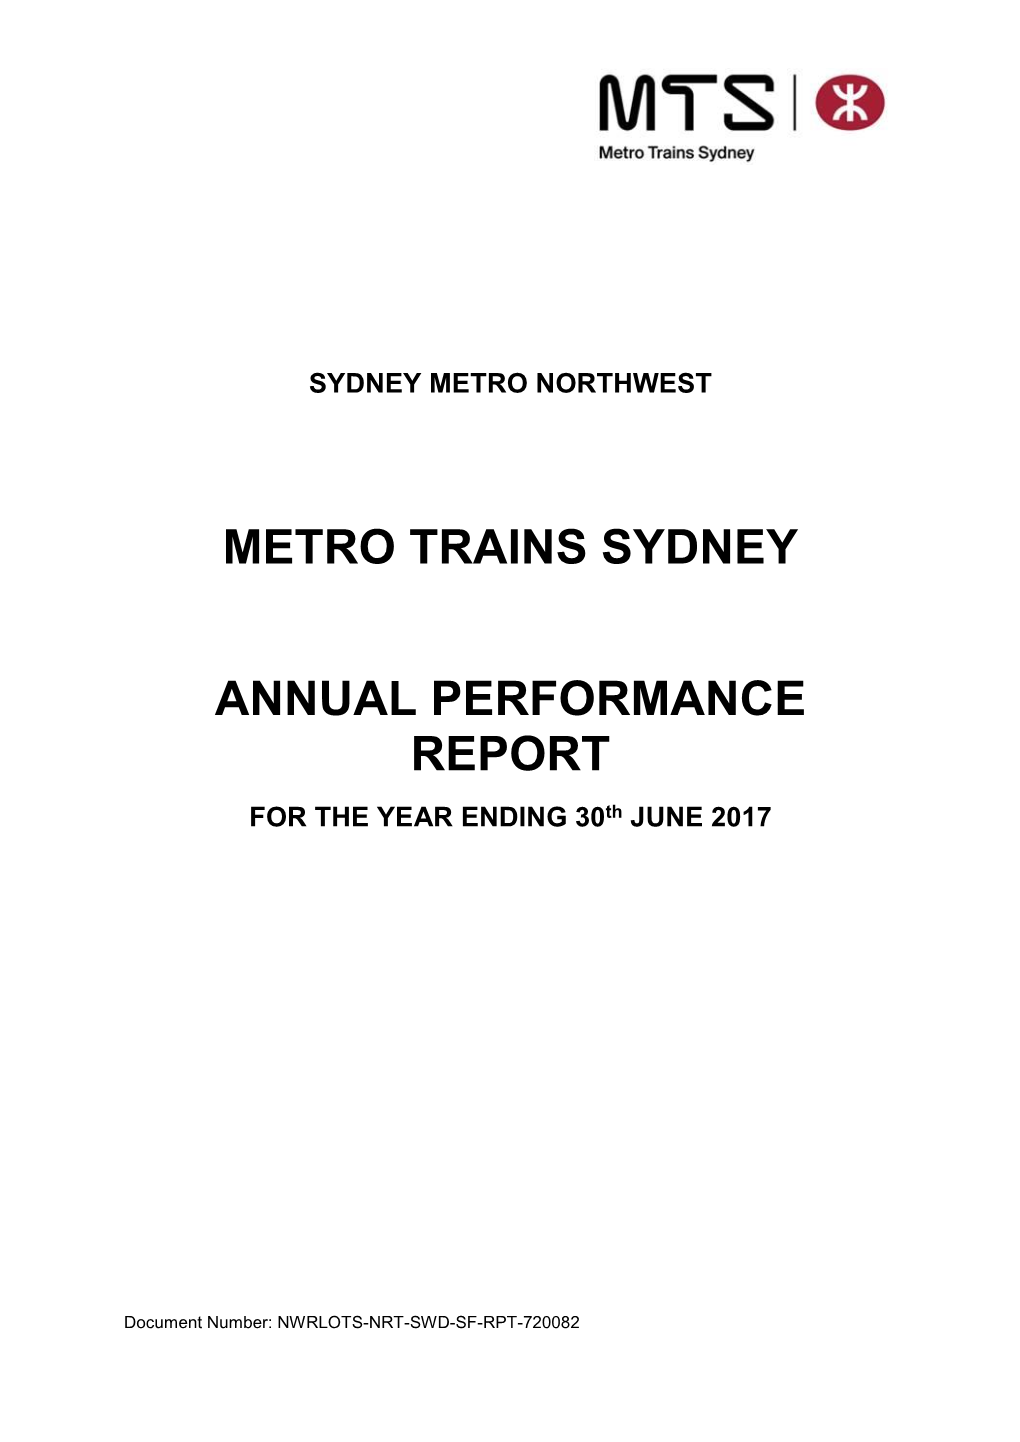 Metro Trains Sydney Annual Performance Report